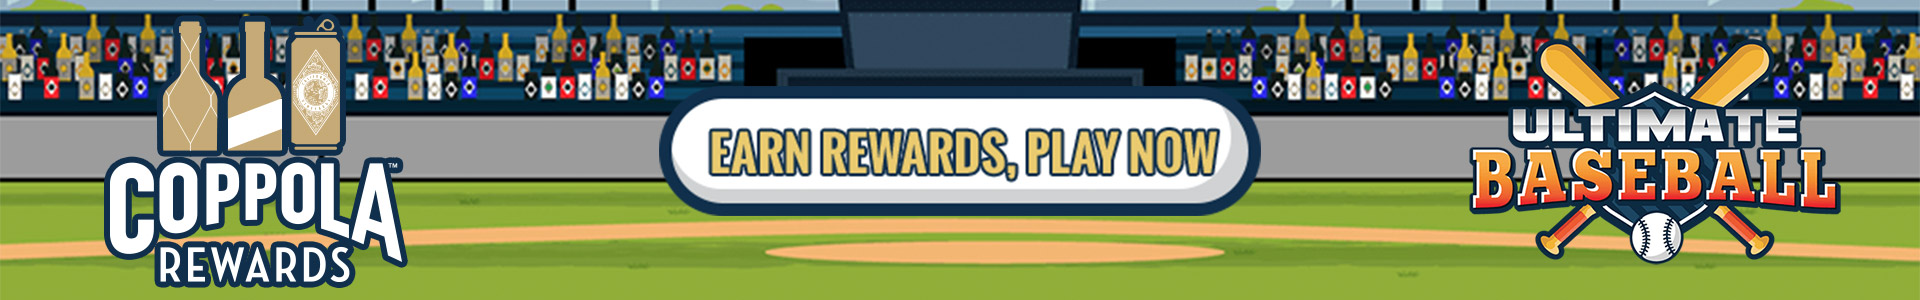 Coppola Rewards Ultimate Baseball. Earn Rewards, Play Now!